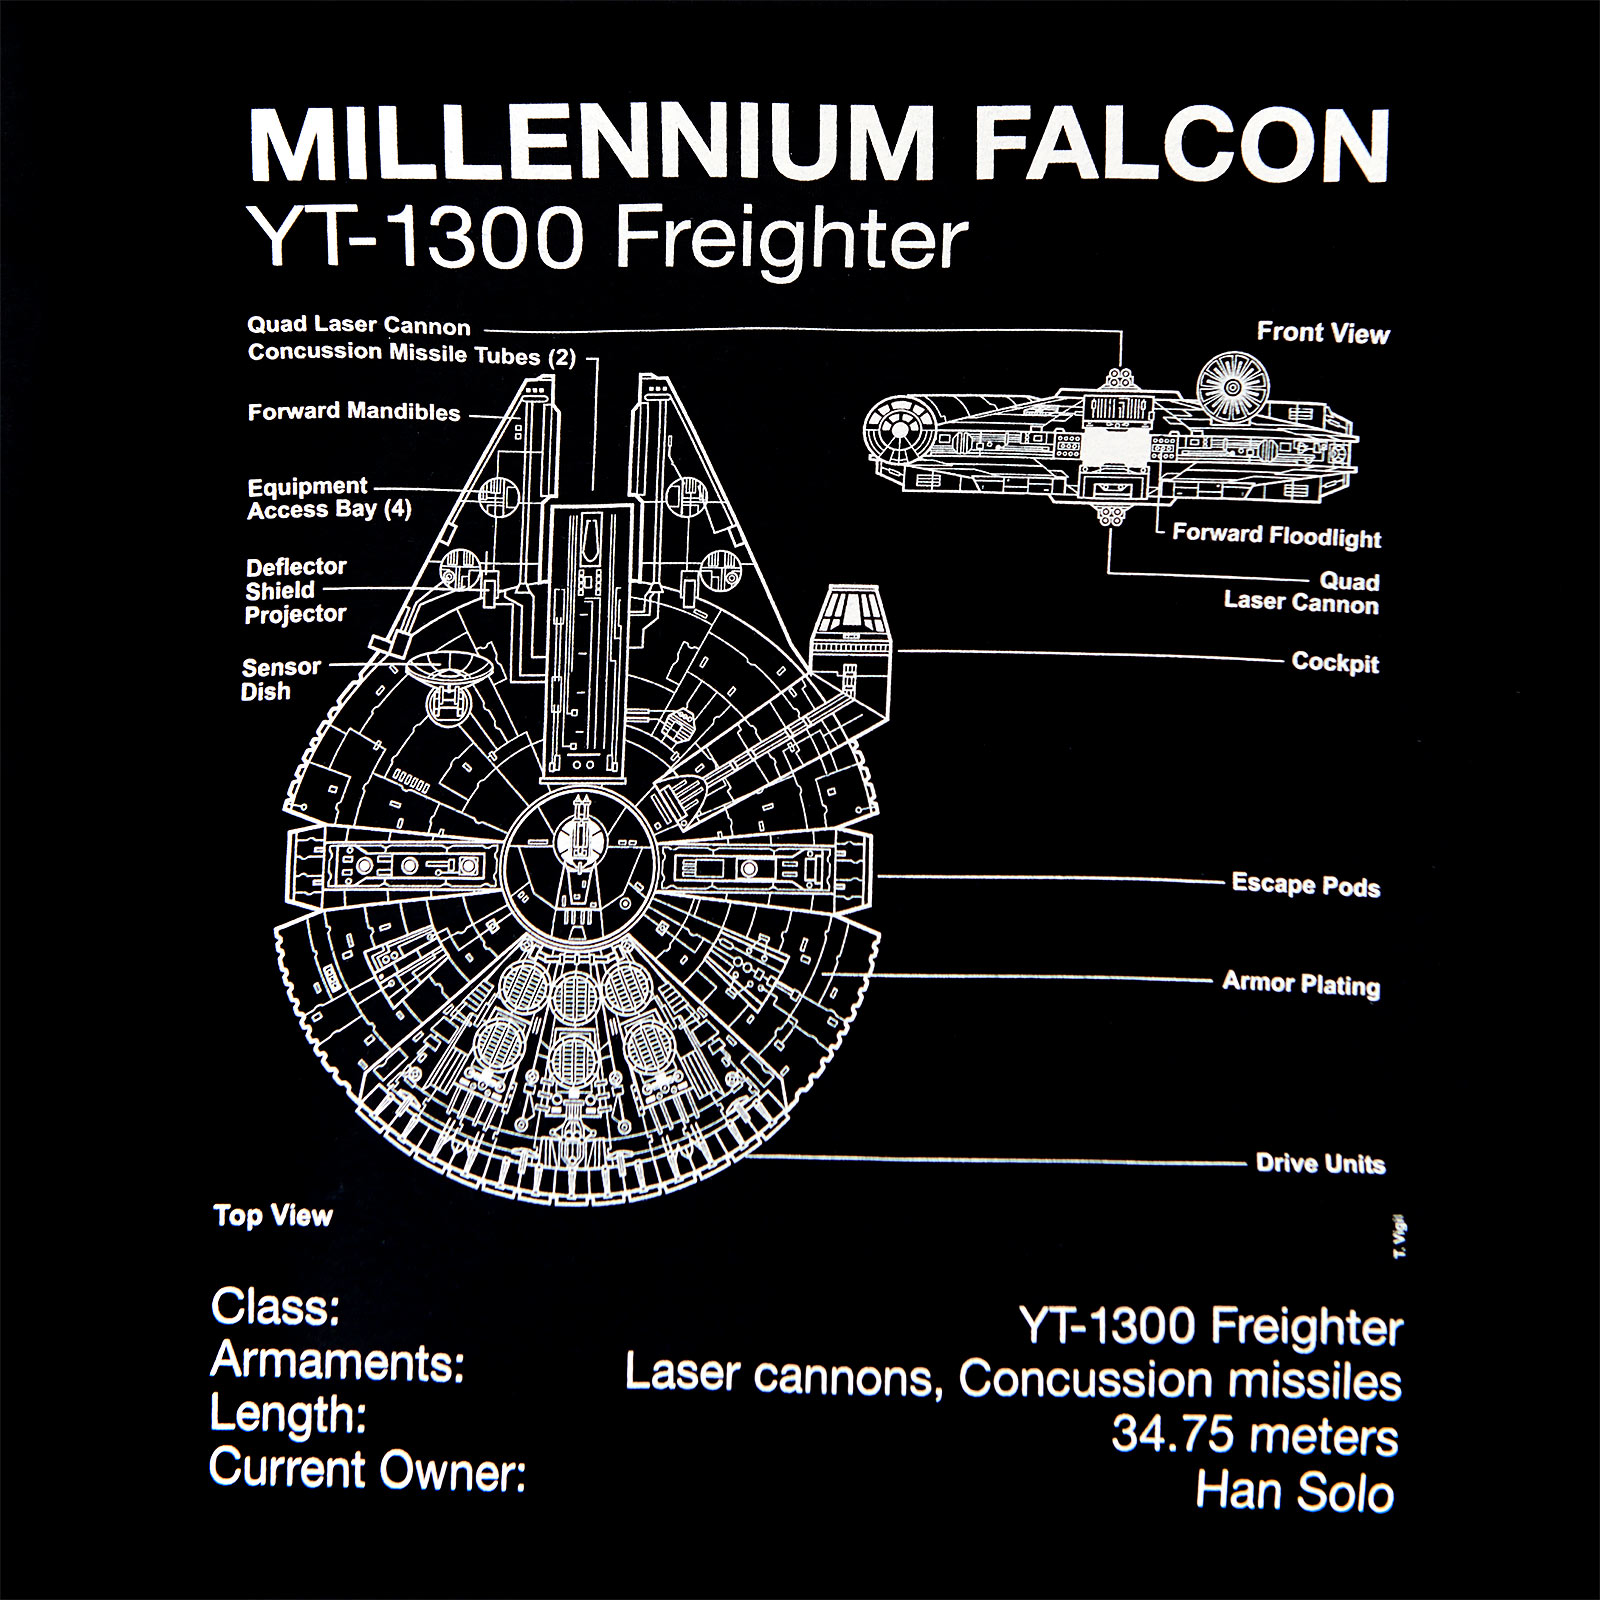 Star Wars - Millennium Falcon Sketch T-Shirt Black